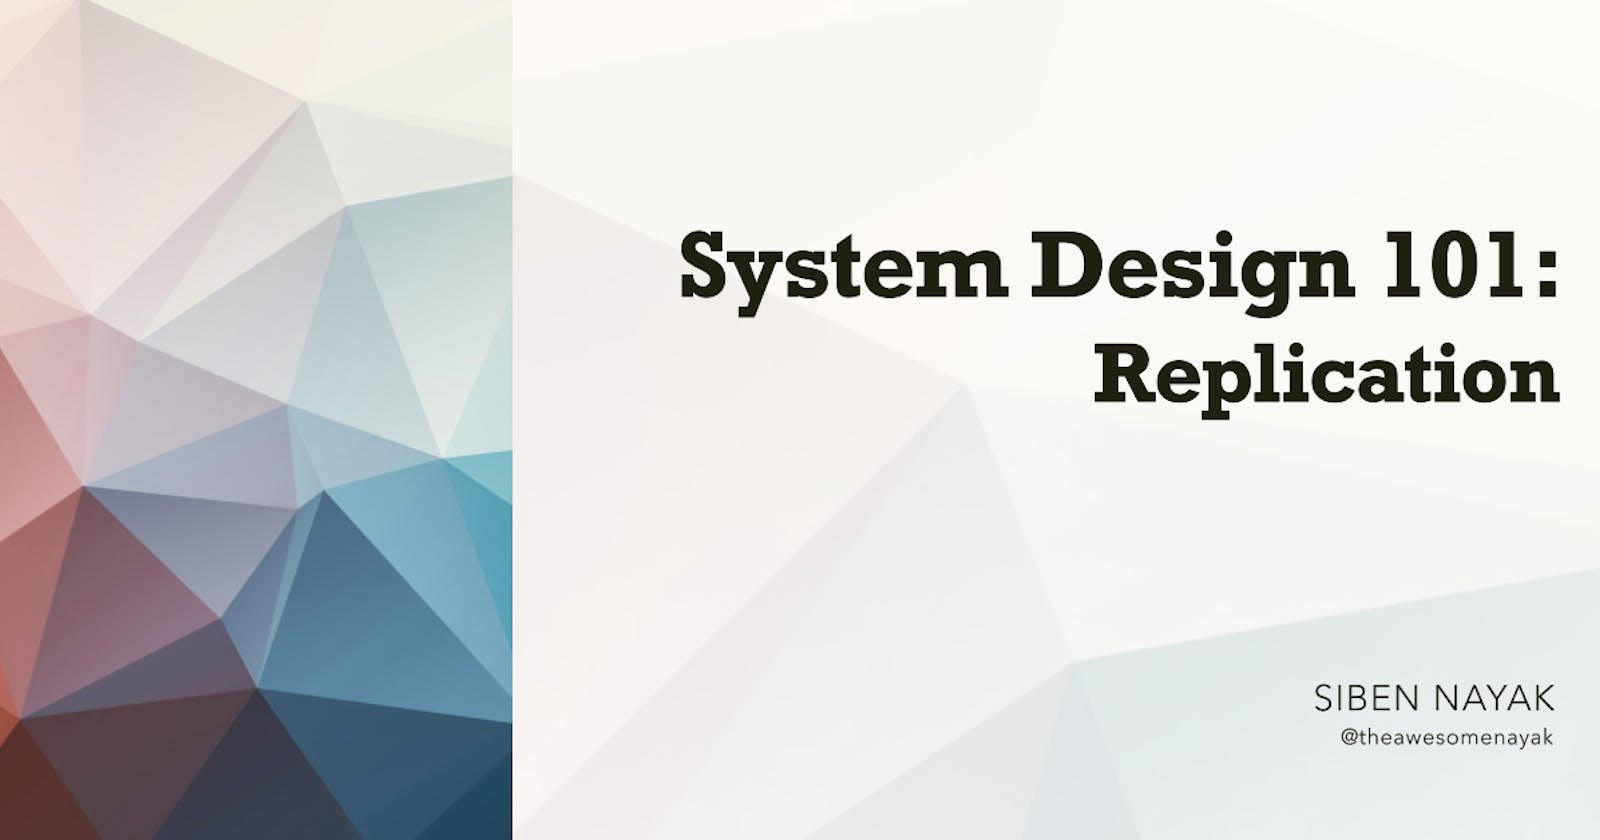 System Design 101 - Replication